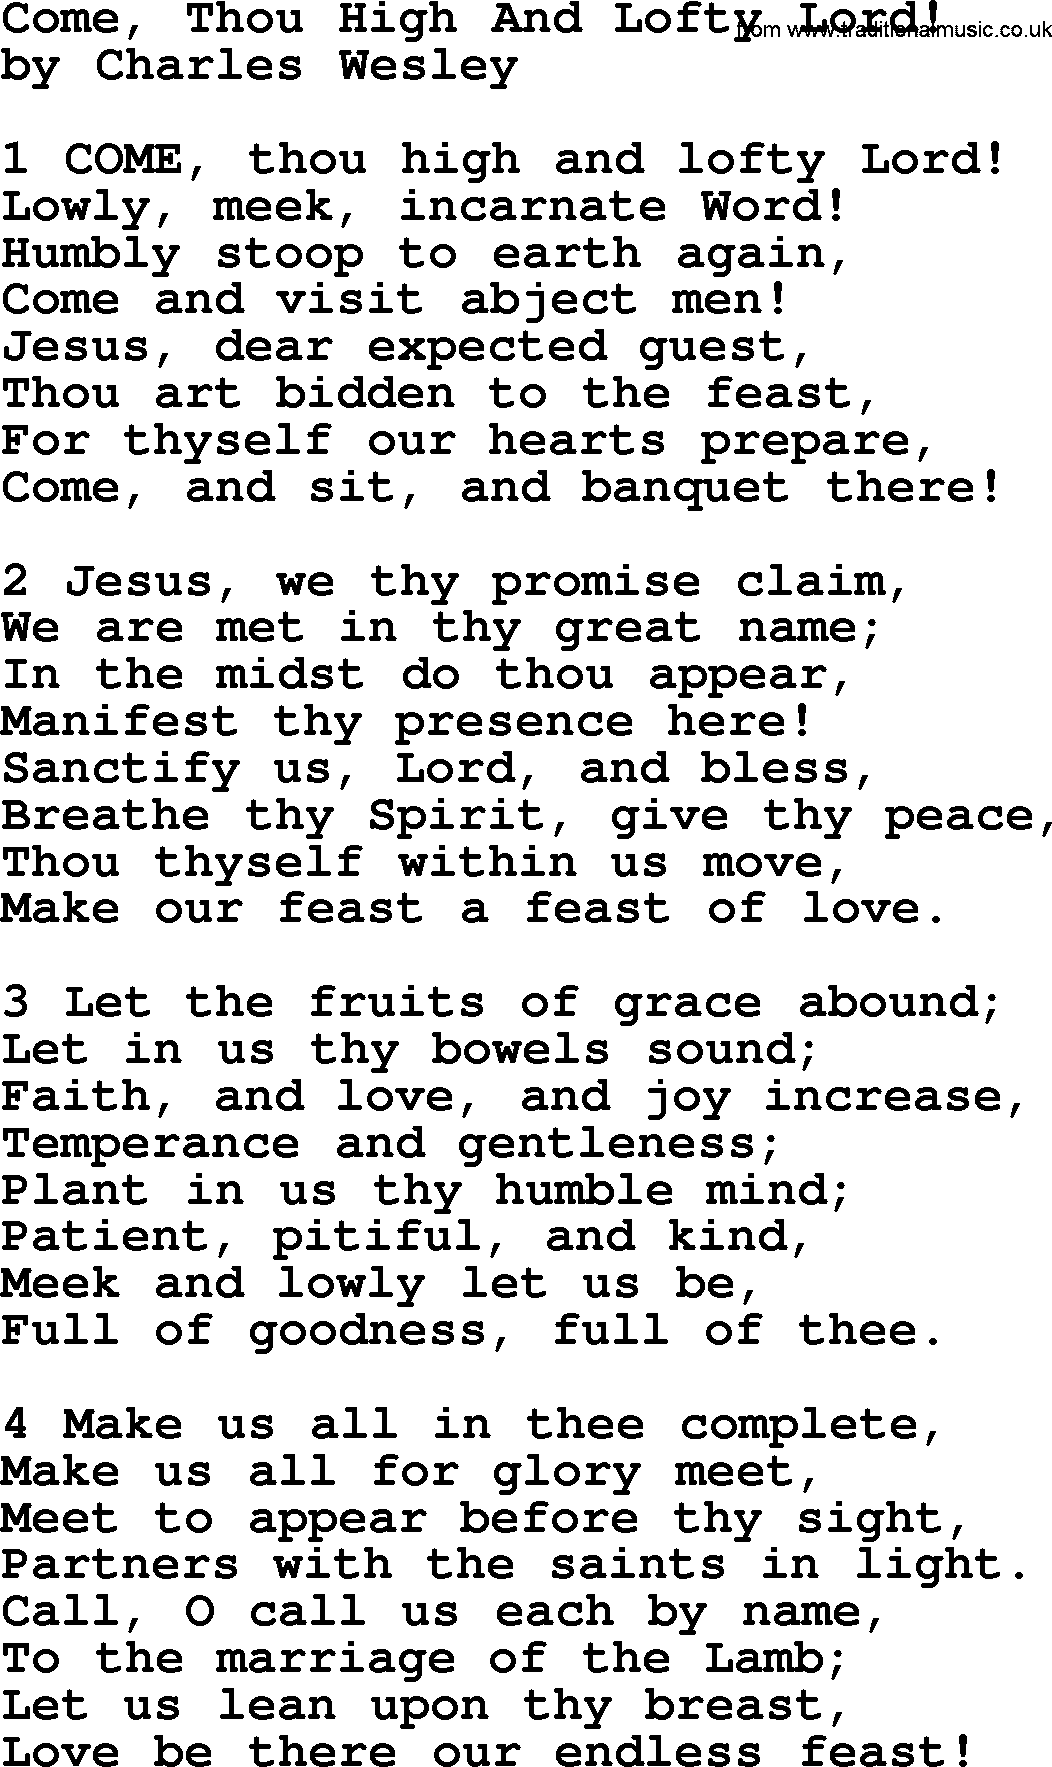 Charles Wesley hymn: Come, Thou High And Lofty Lord!, lyrics